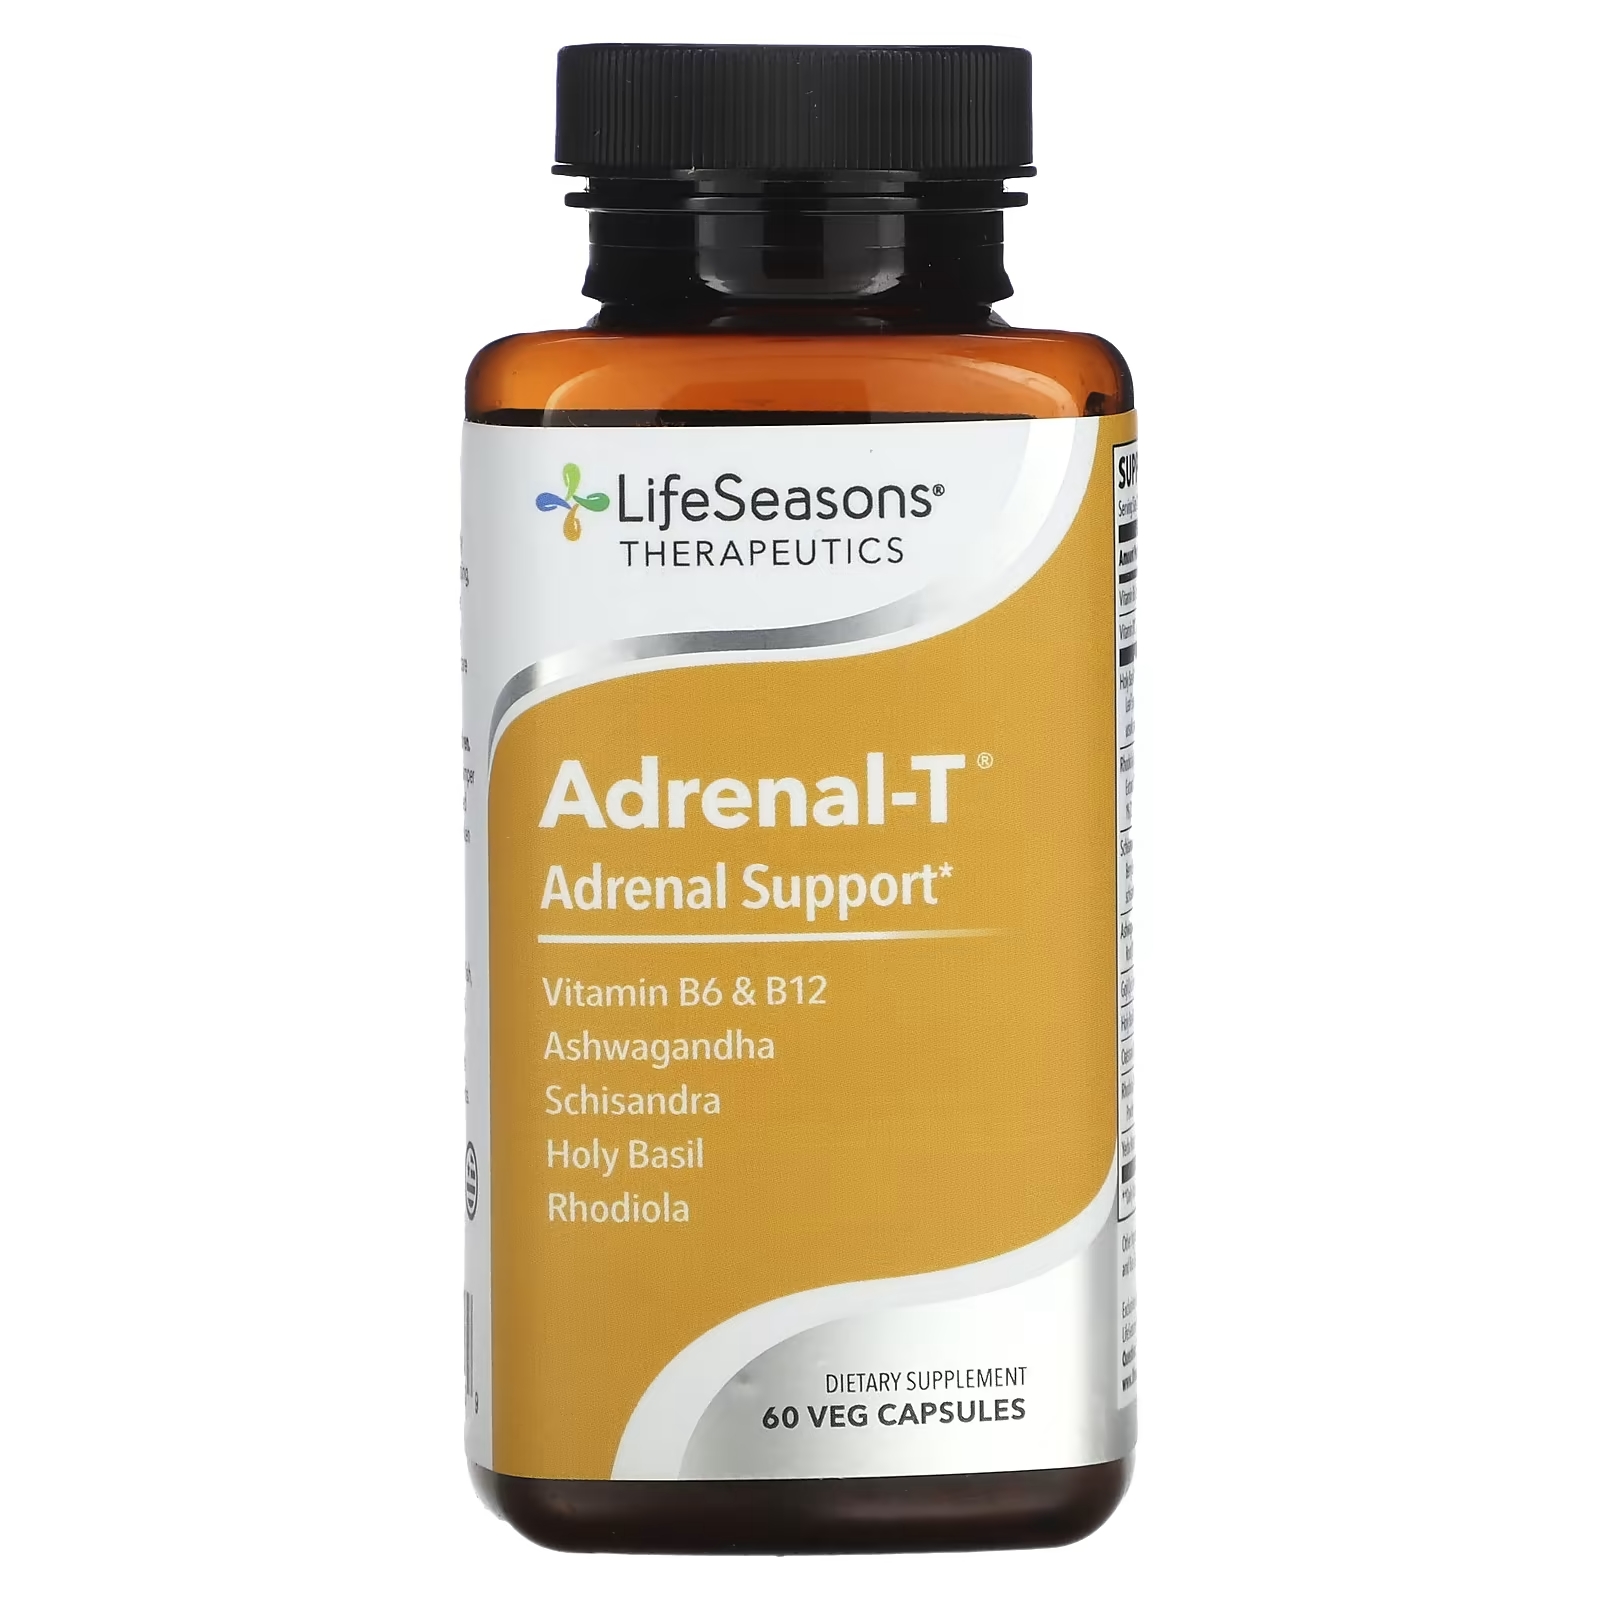 LifeSeasons Adrenal-T адреналиновая поддержка, 60 вегетарианских капсул цена и фото